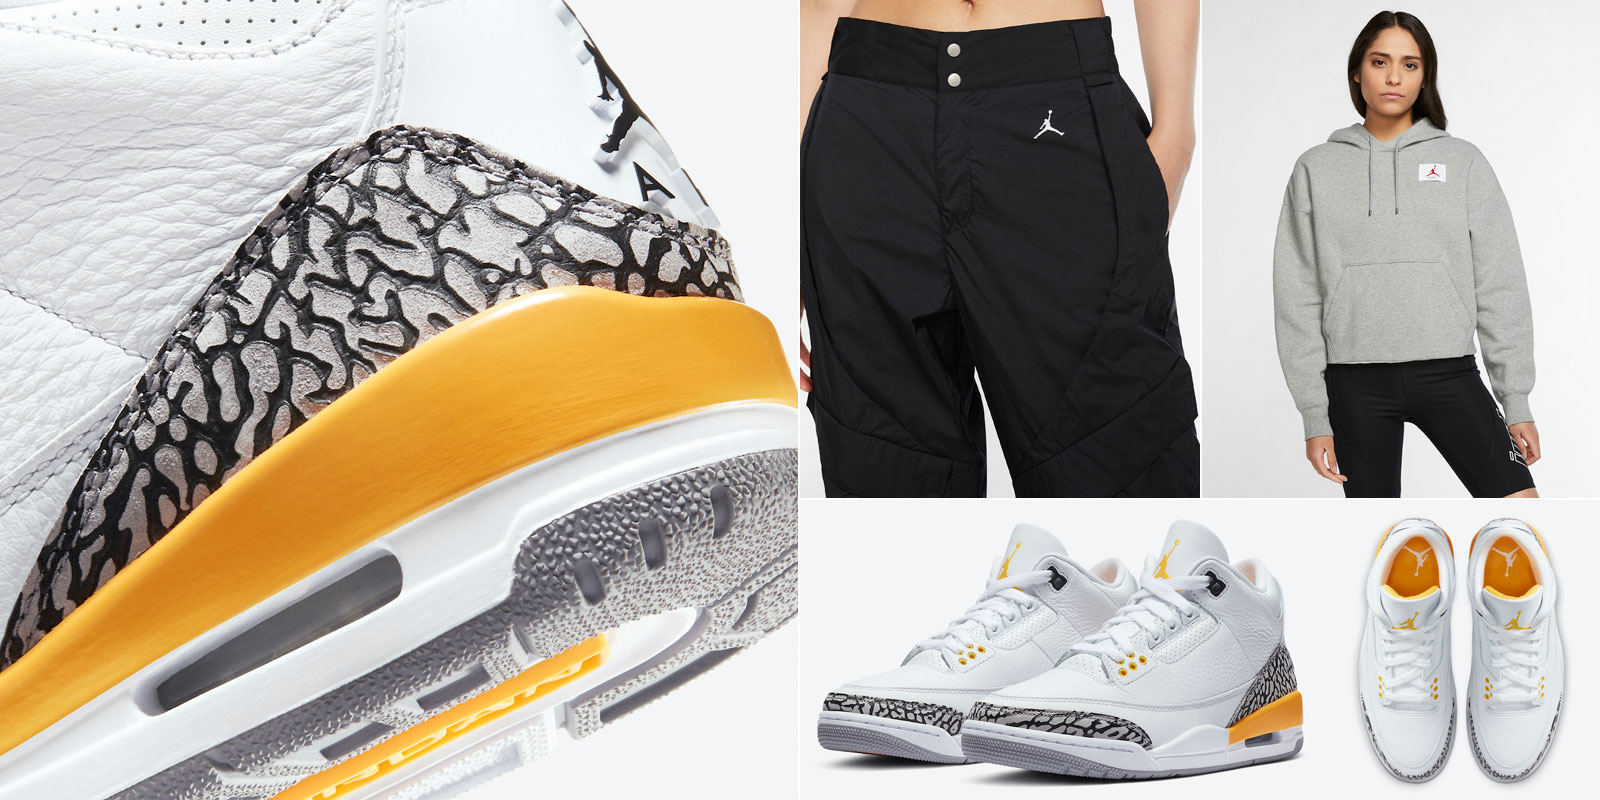 Air Jordan 3 Laser Orange Clothing Match | SneakerFits.com